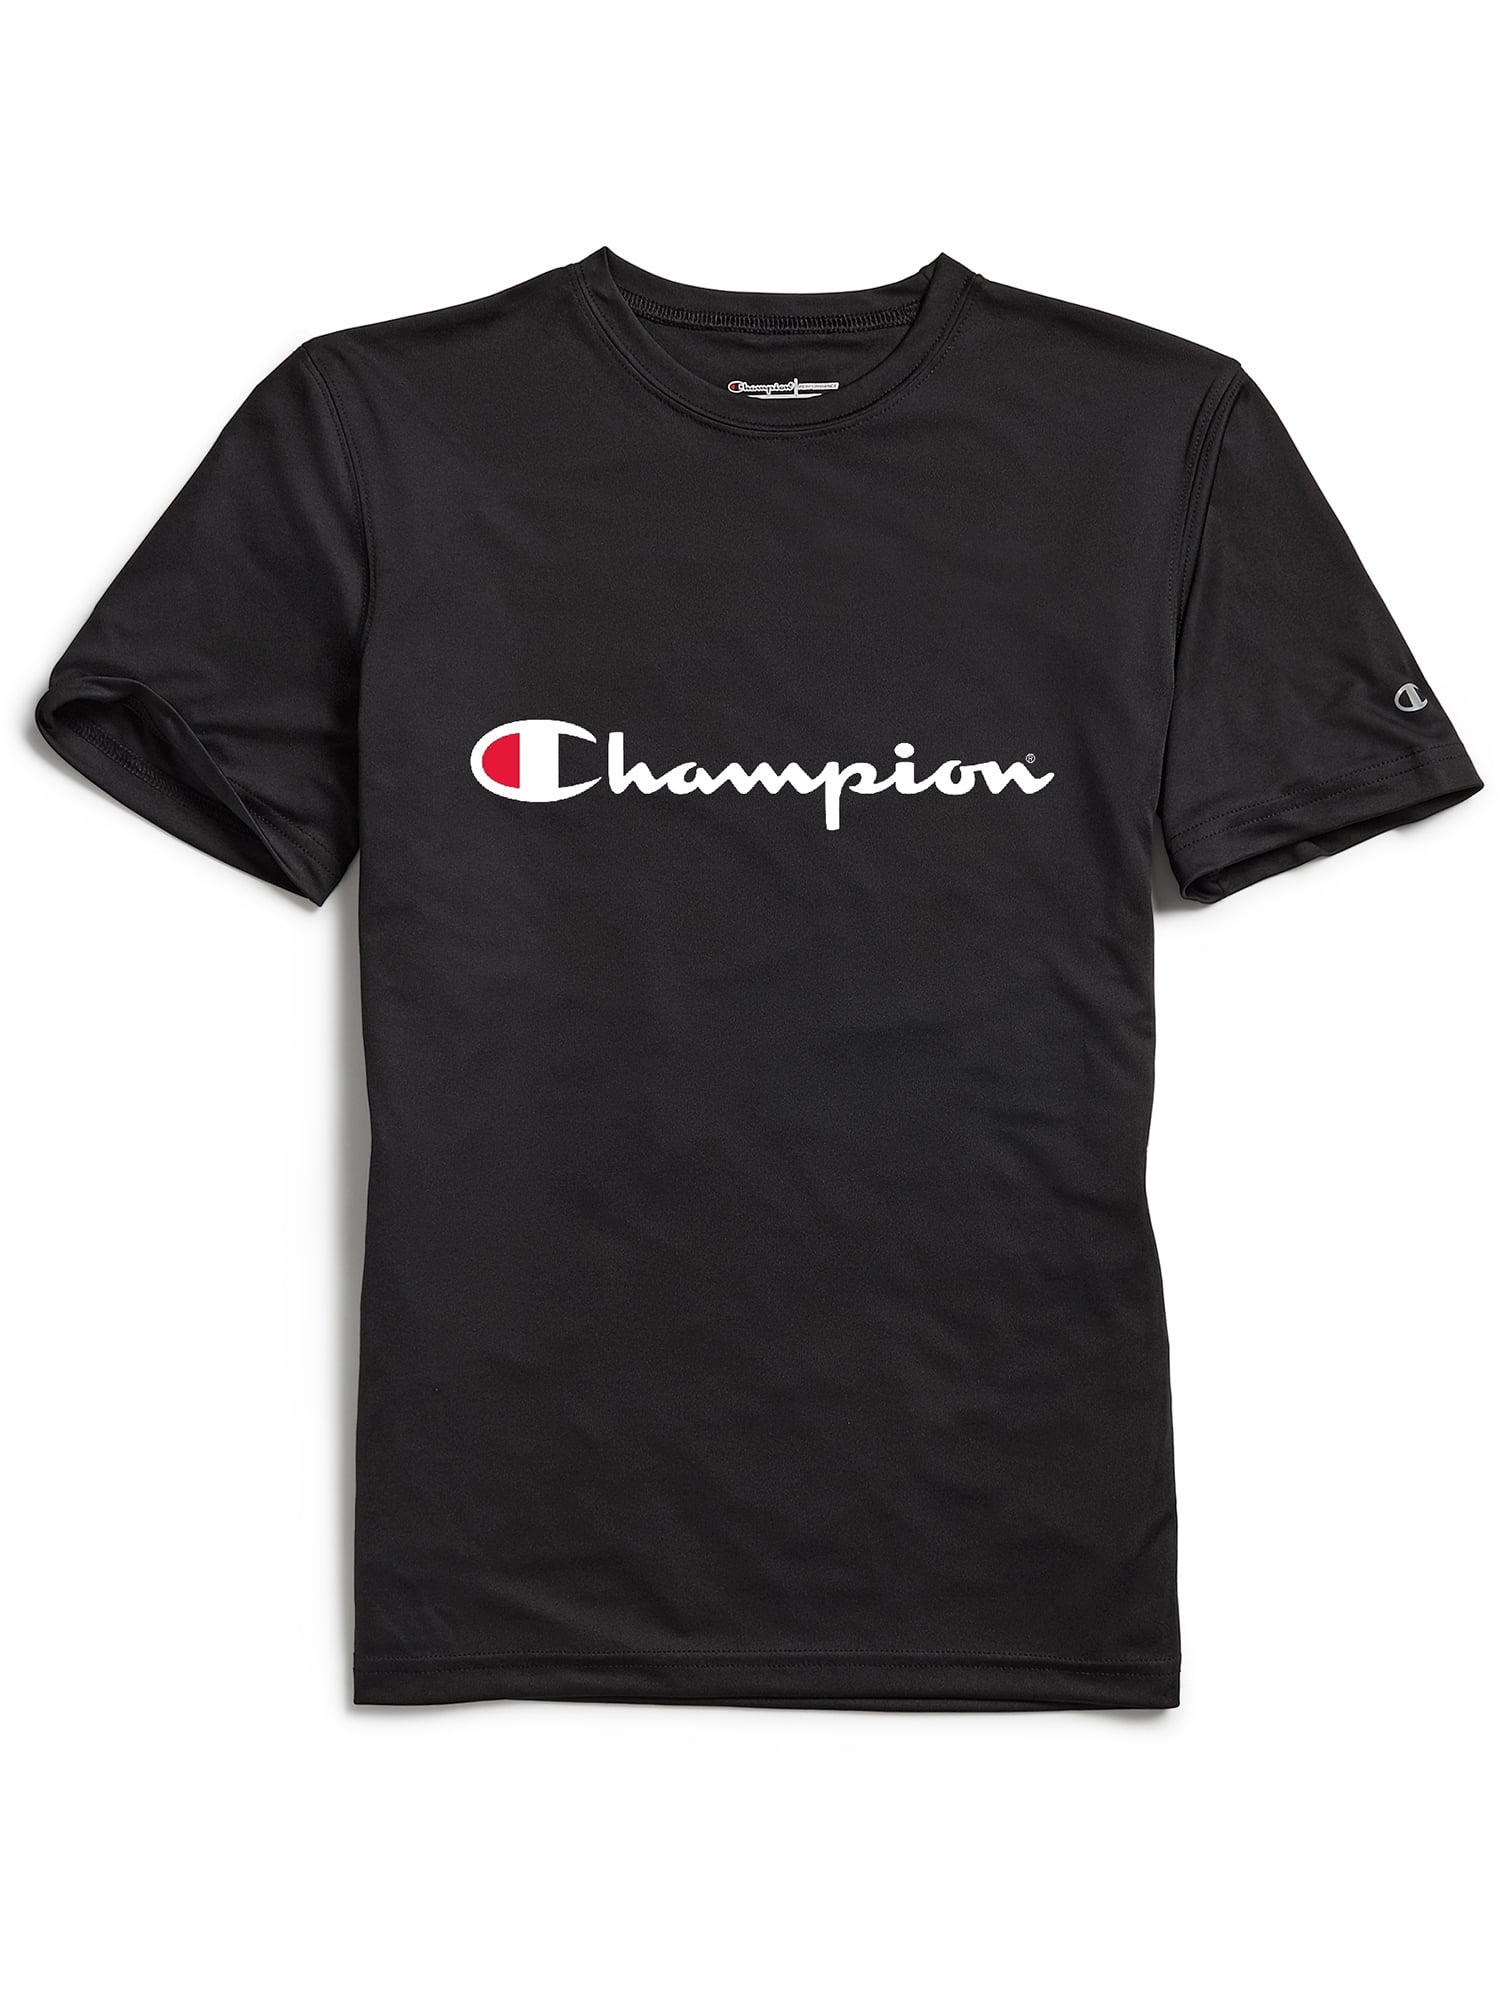 Champion - Champion Youth Double Dry Logo Tee, S, Black - Walmart.com ...